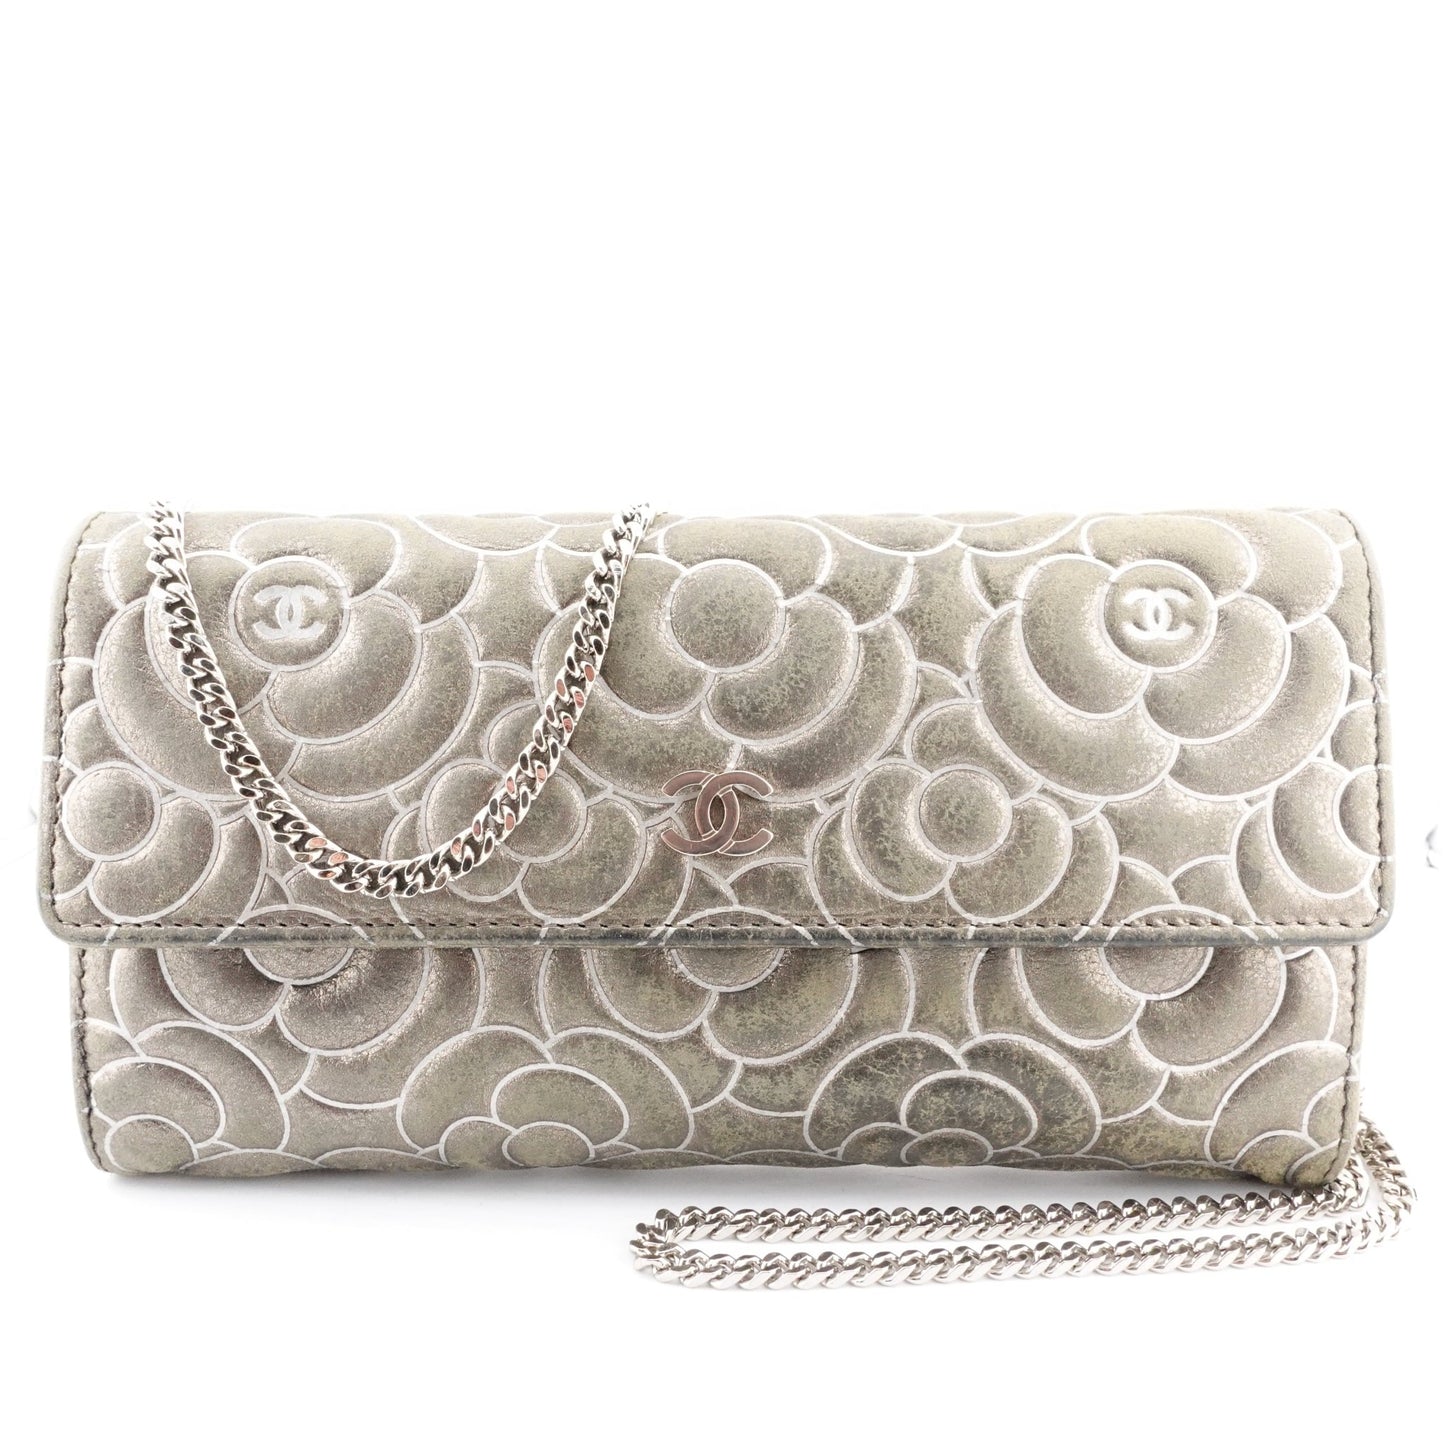 CHANEL Aged Calfskin Camellia Long Flap Wallet on Chain - Bag Envy